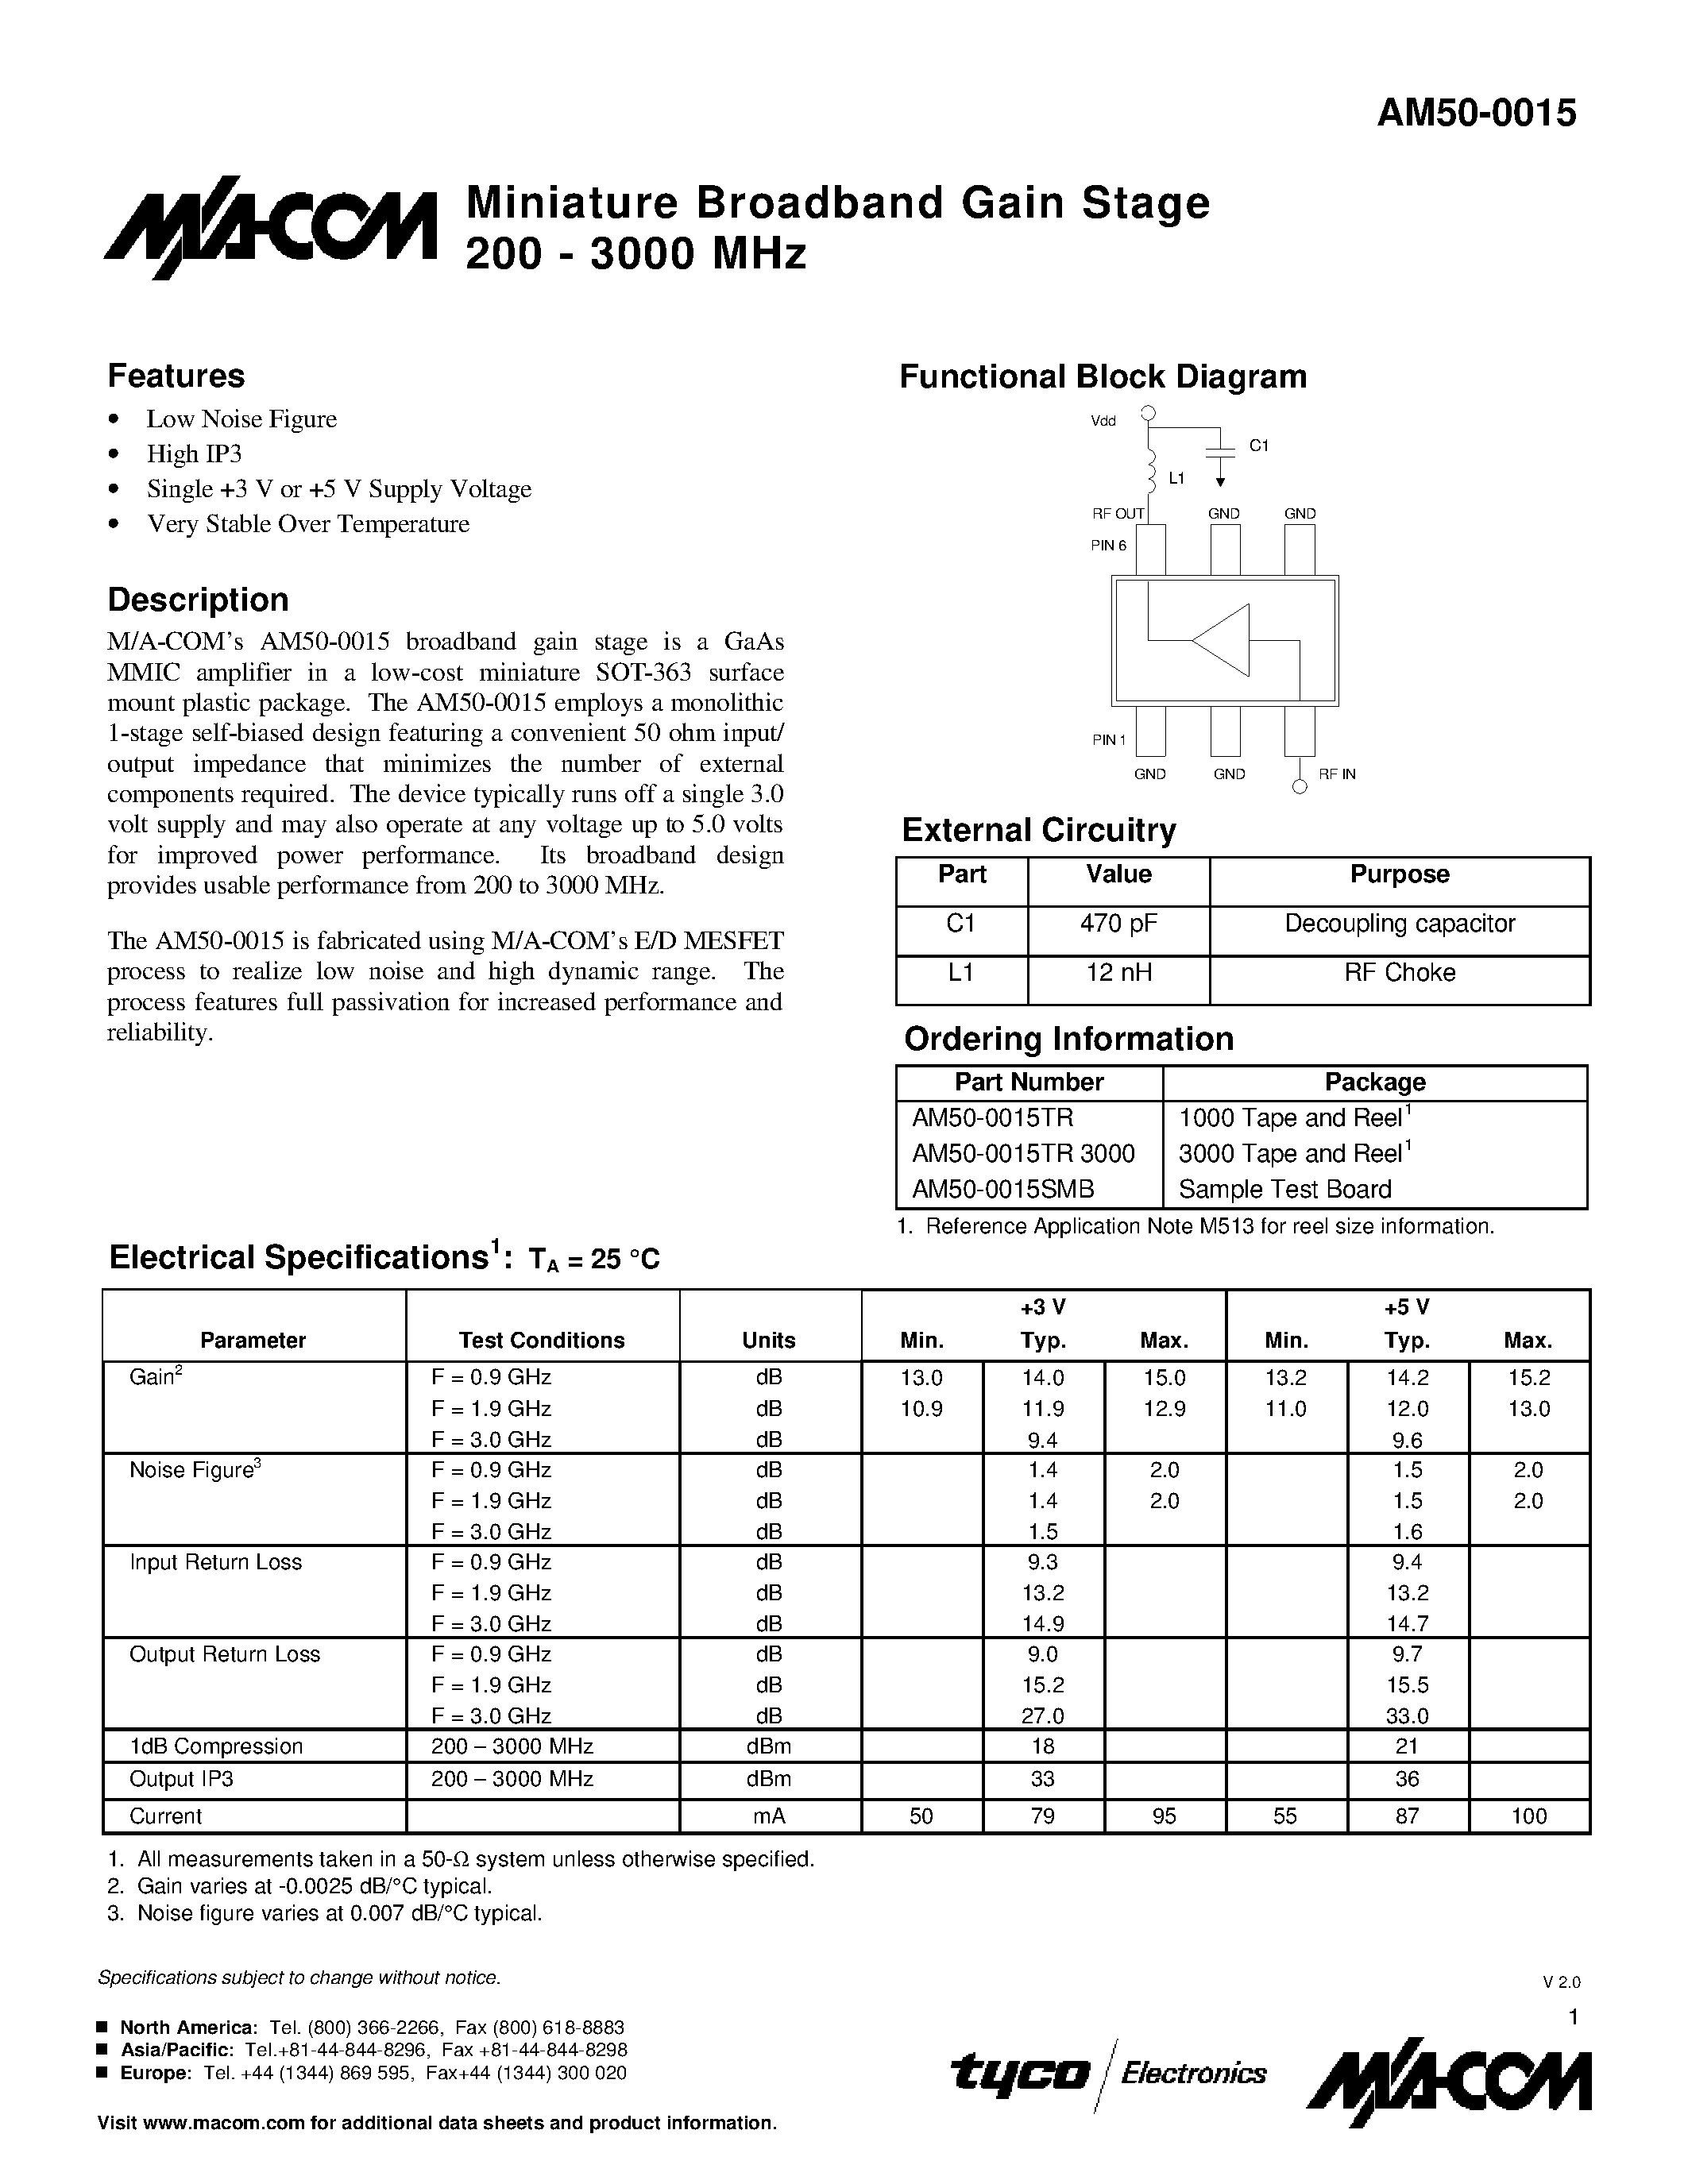 Datasheet AM50-0015 - Miniature Broadband Gain Stage 200 - 3000 MHz page 1